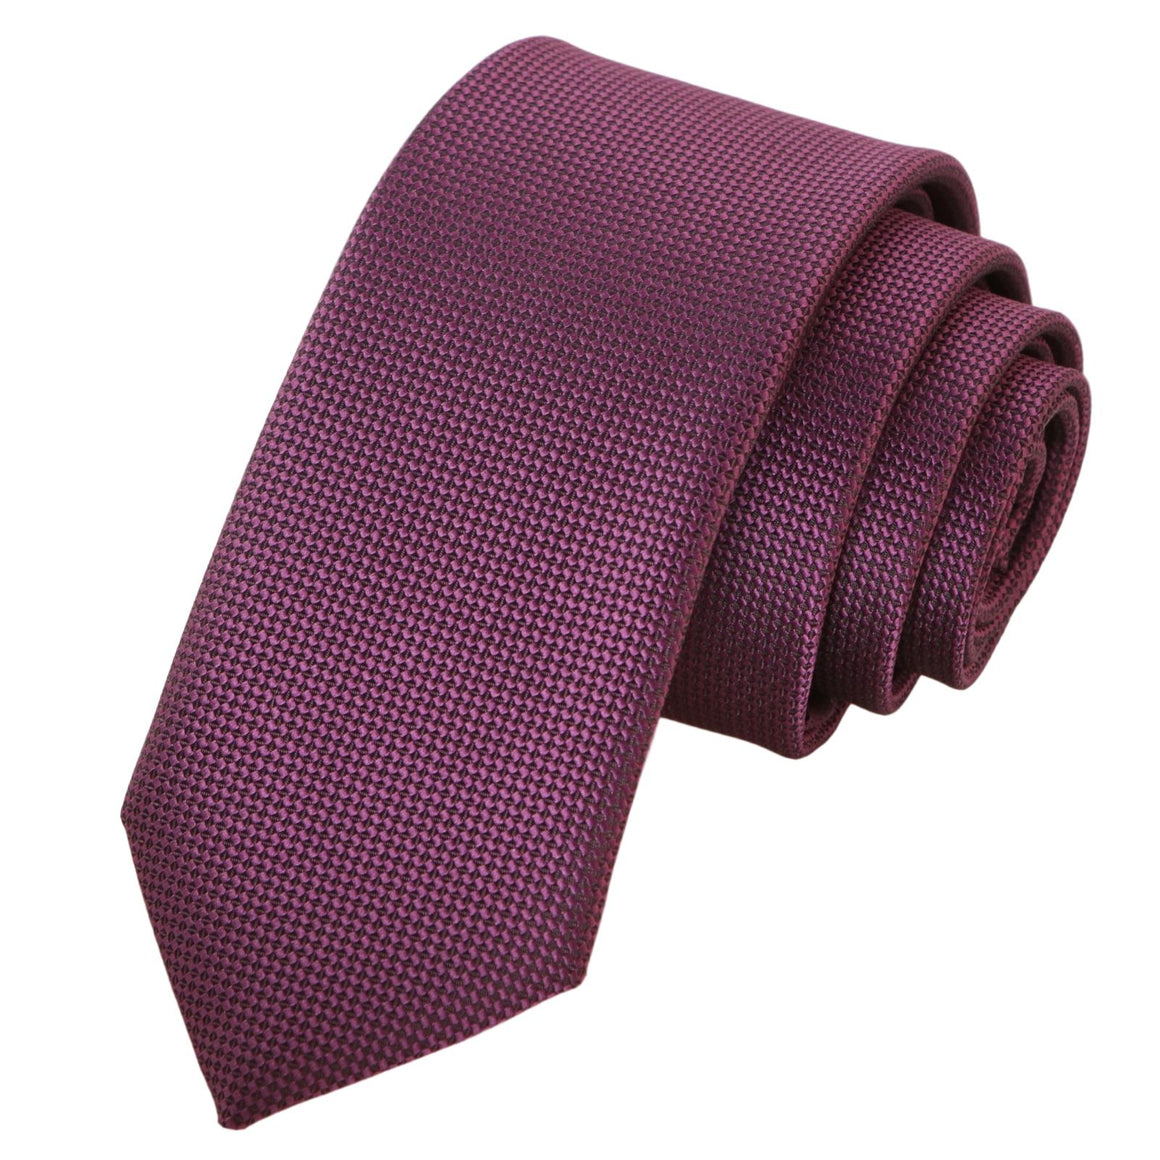 GASSANI Cravatta da uomo, 6 cm, fucsia, a quadri, strutturata a quadri, cravatta extra lunga